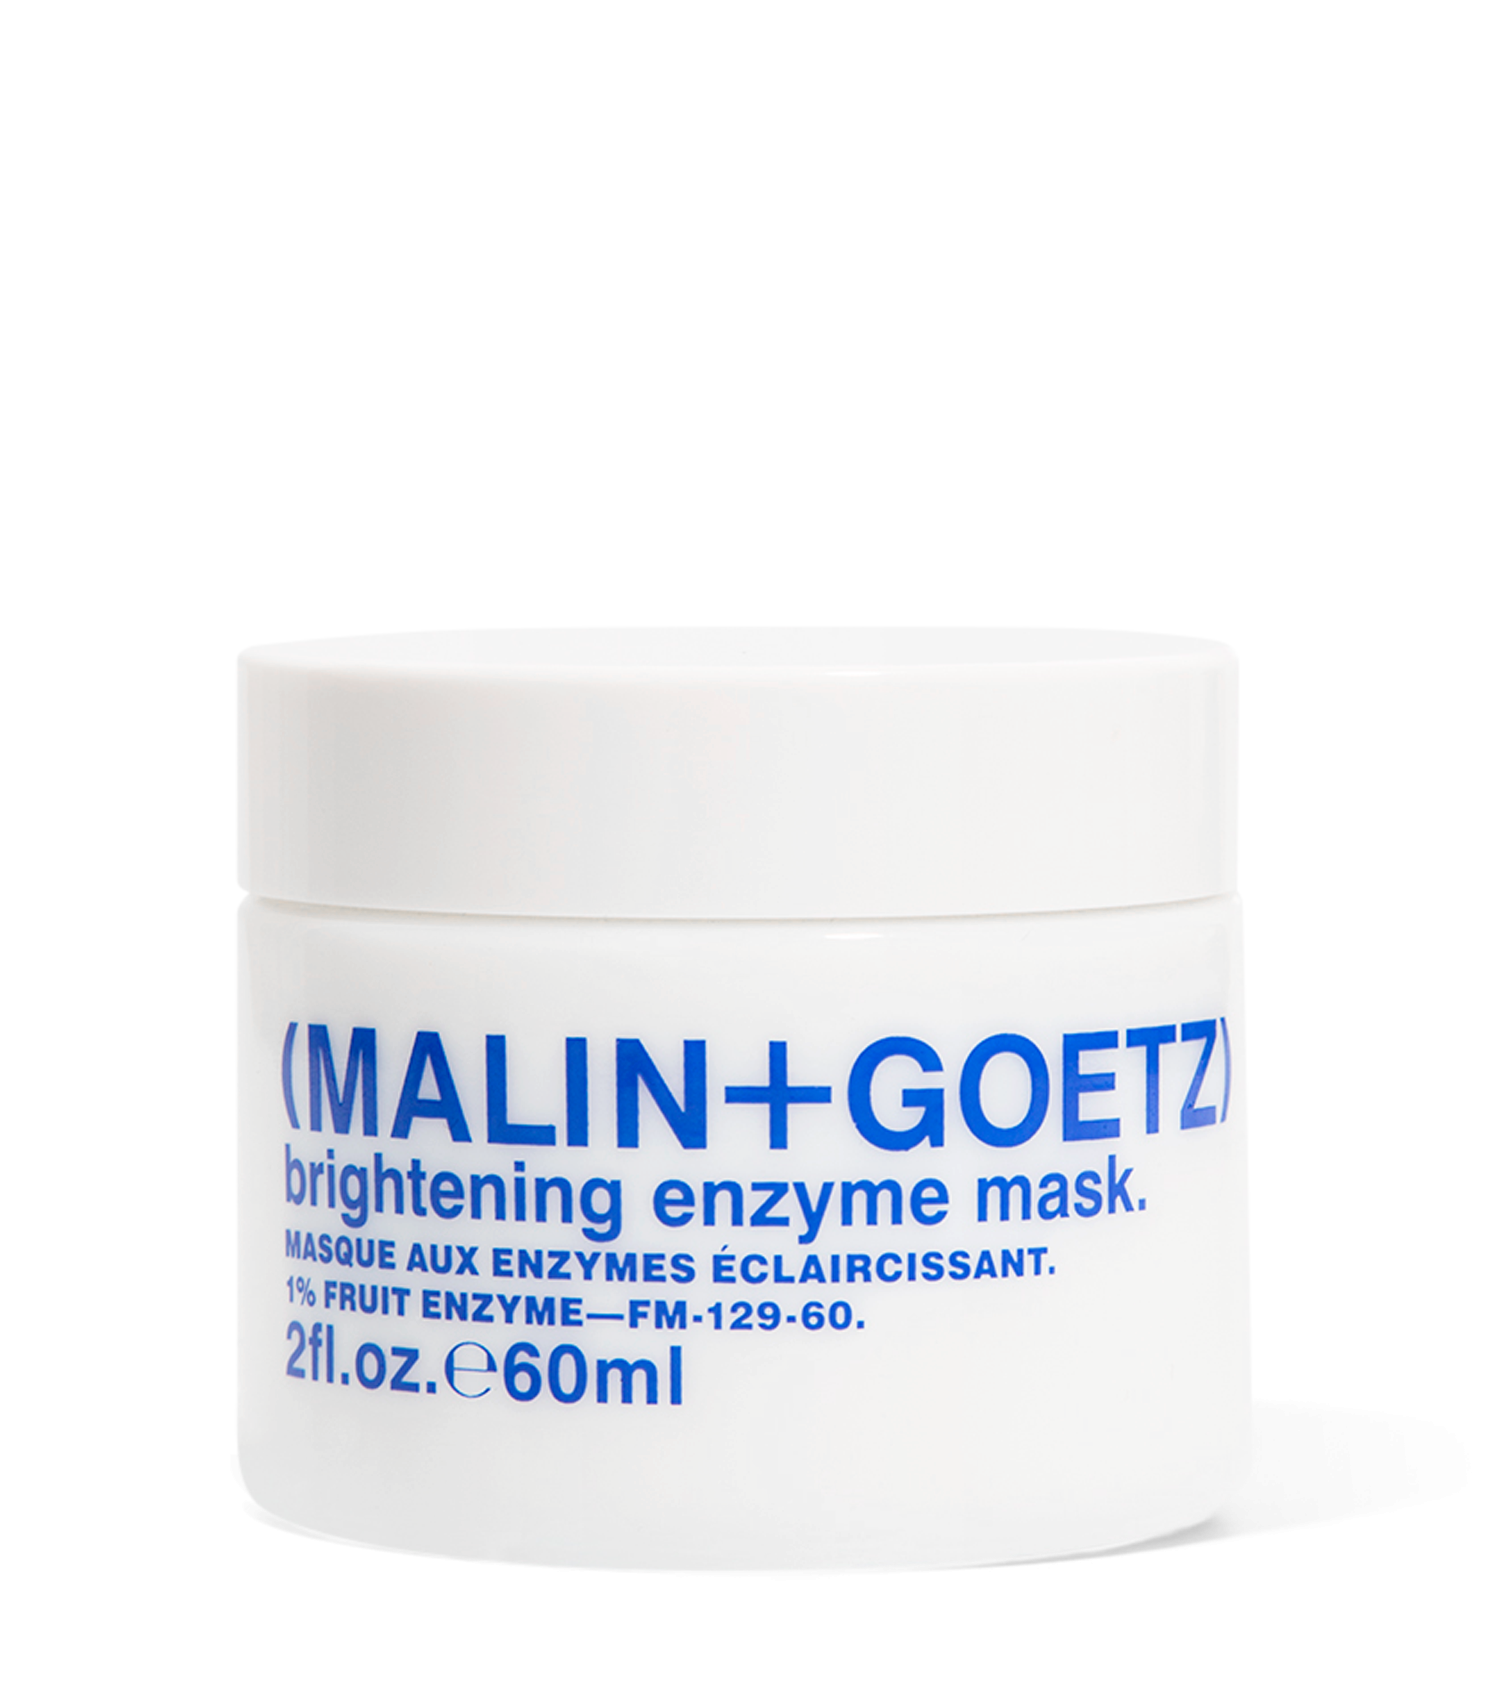 brightening enzyme mask.  1